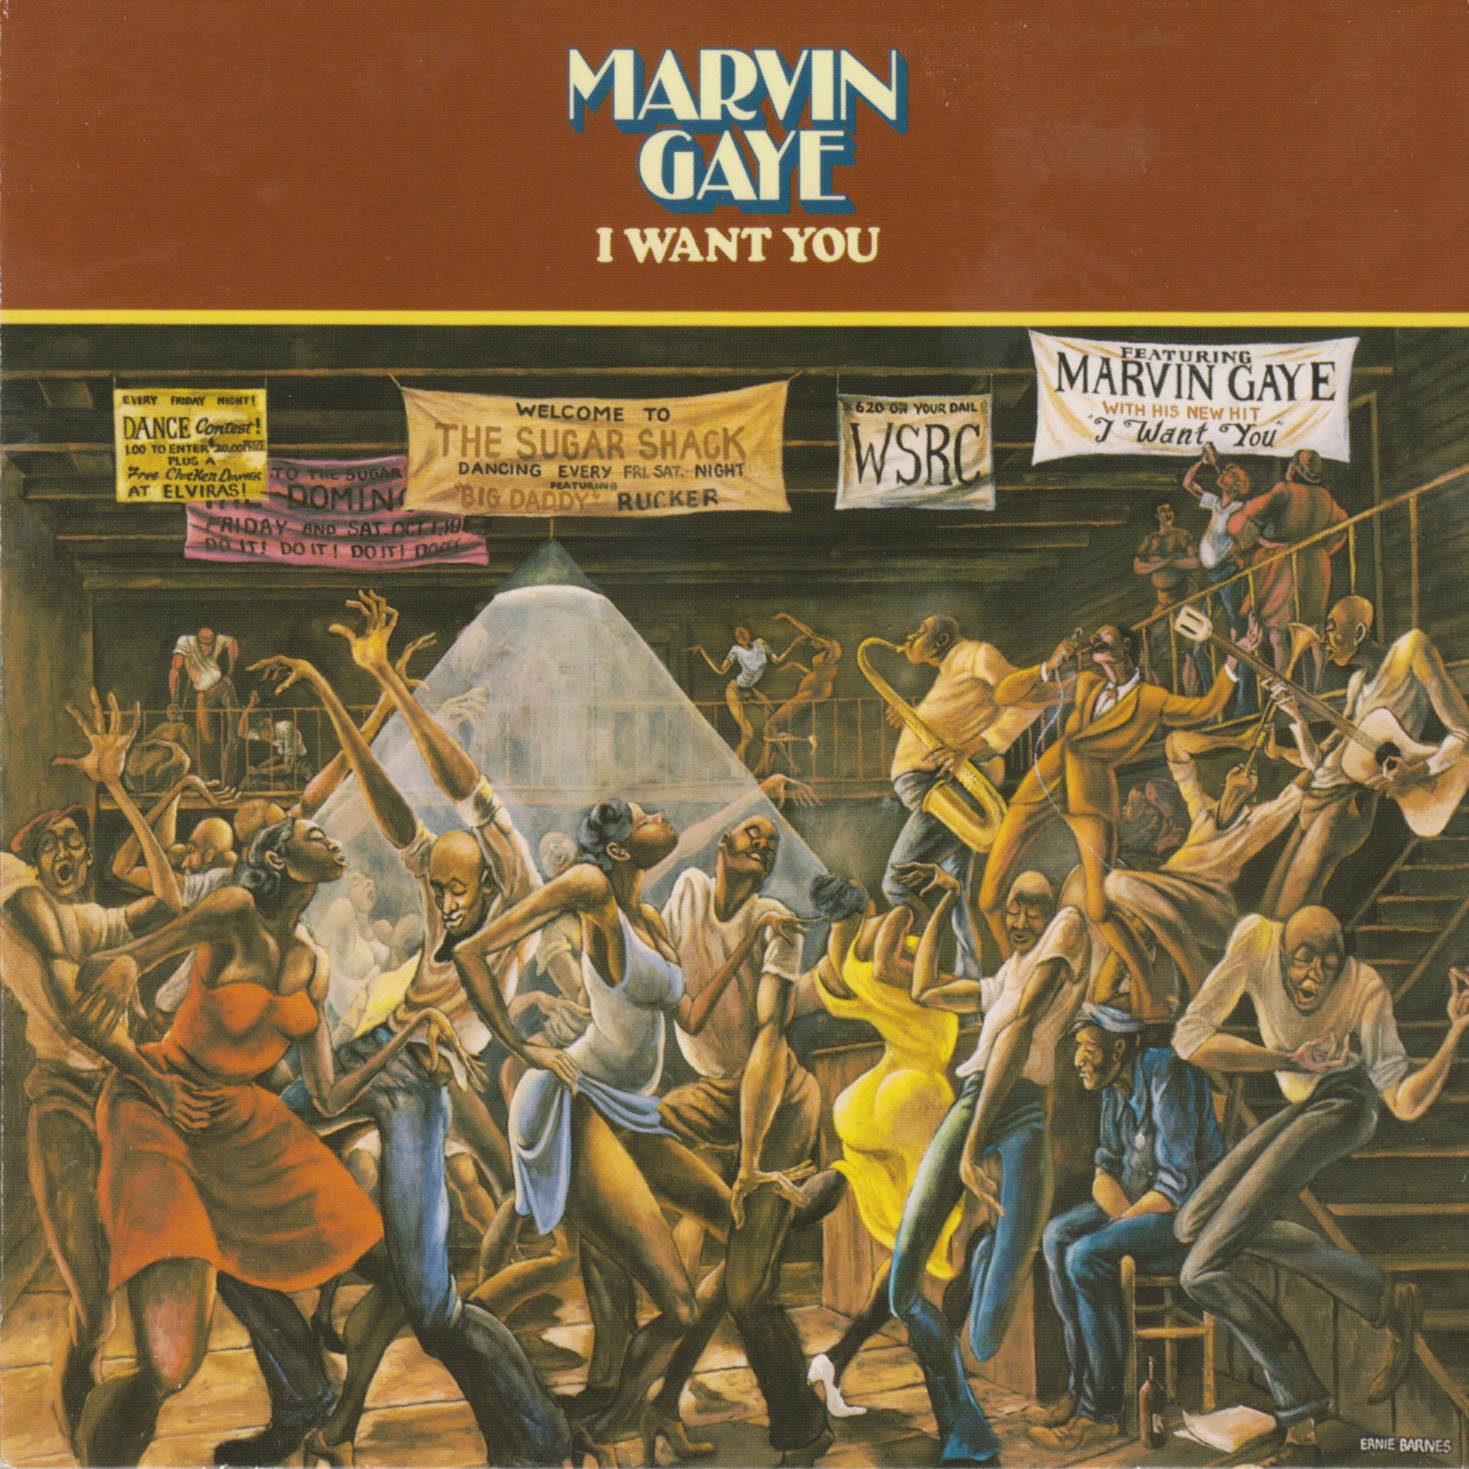 Marvin Gaye's Album 